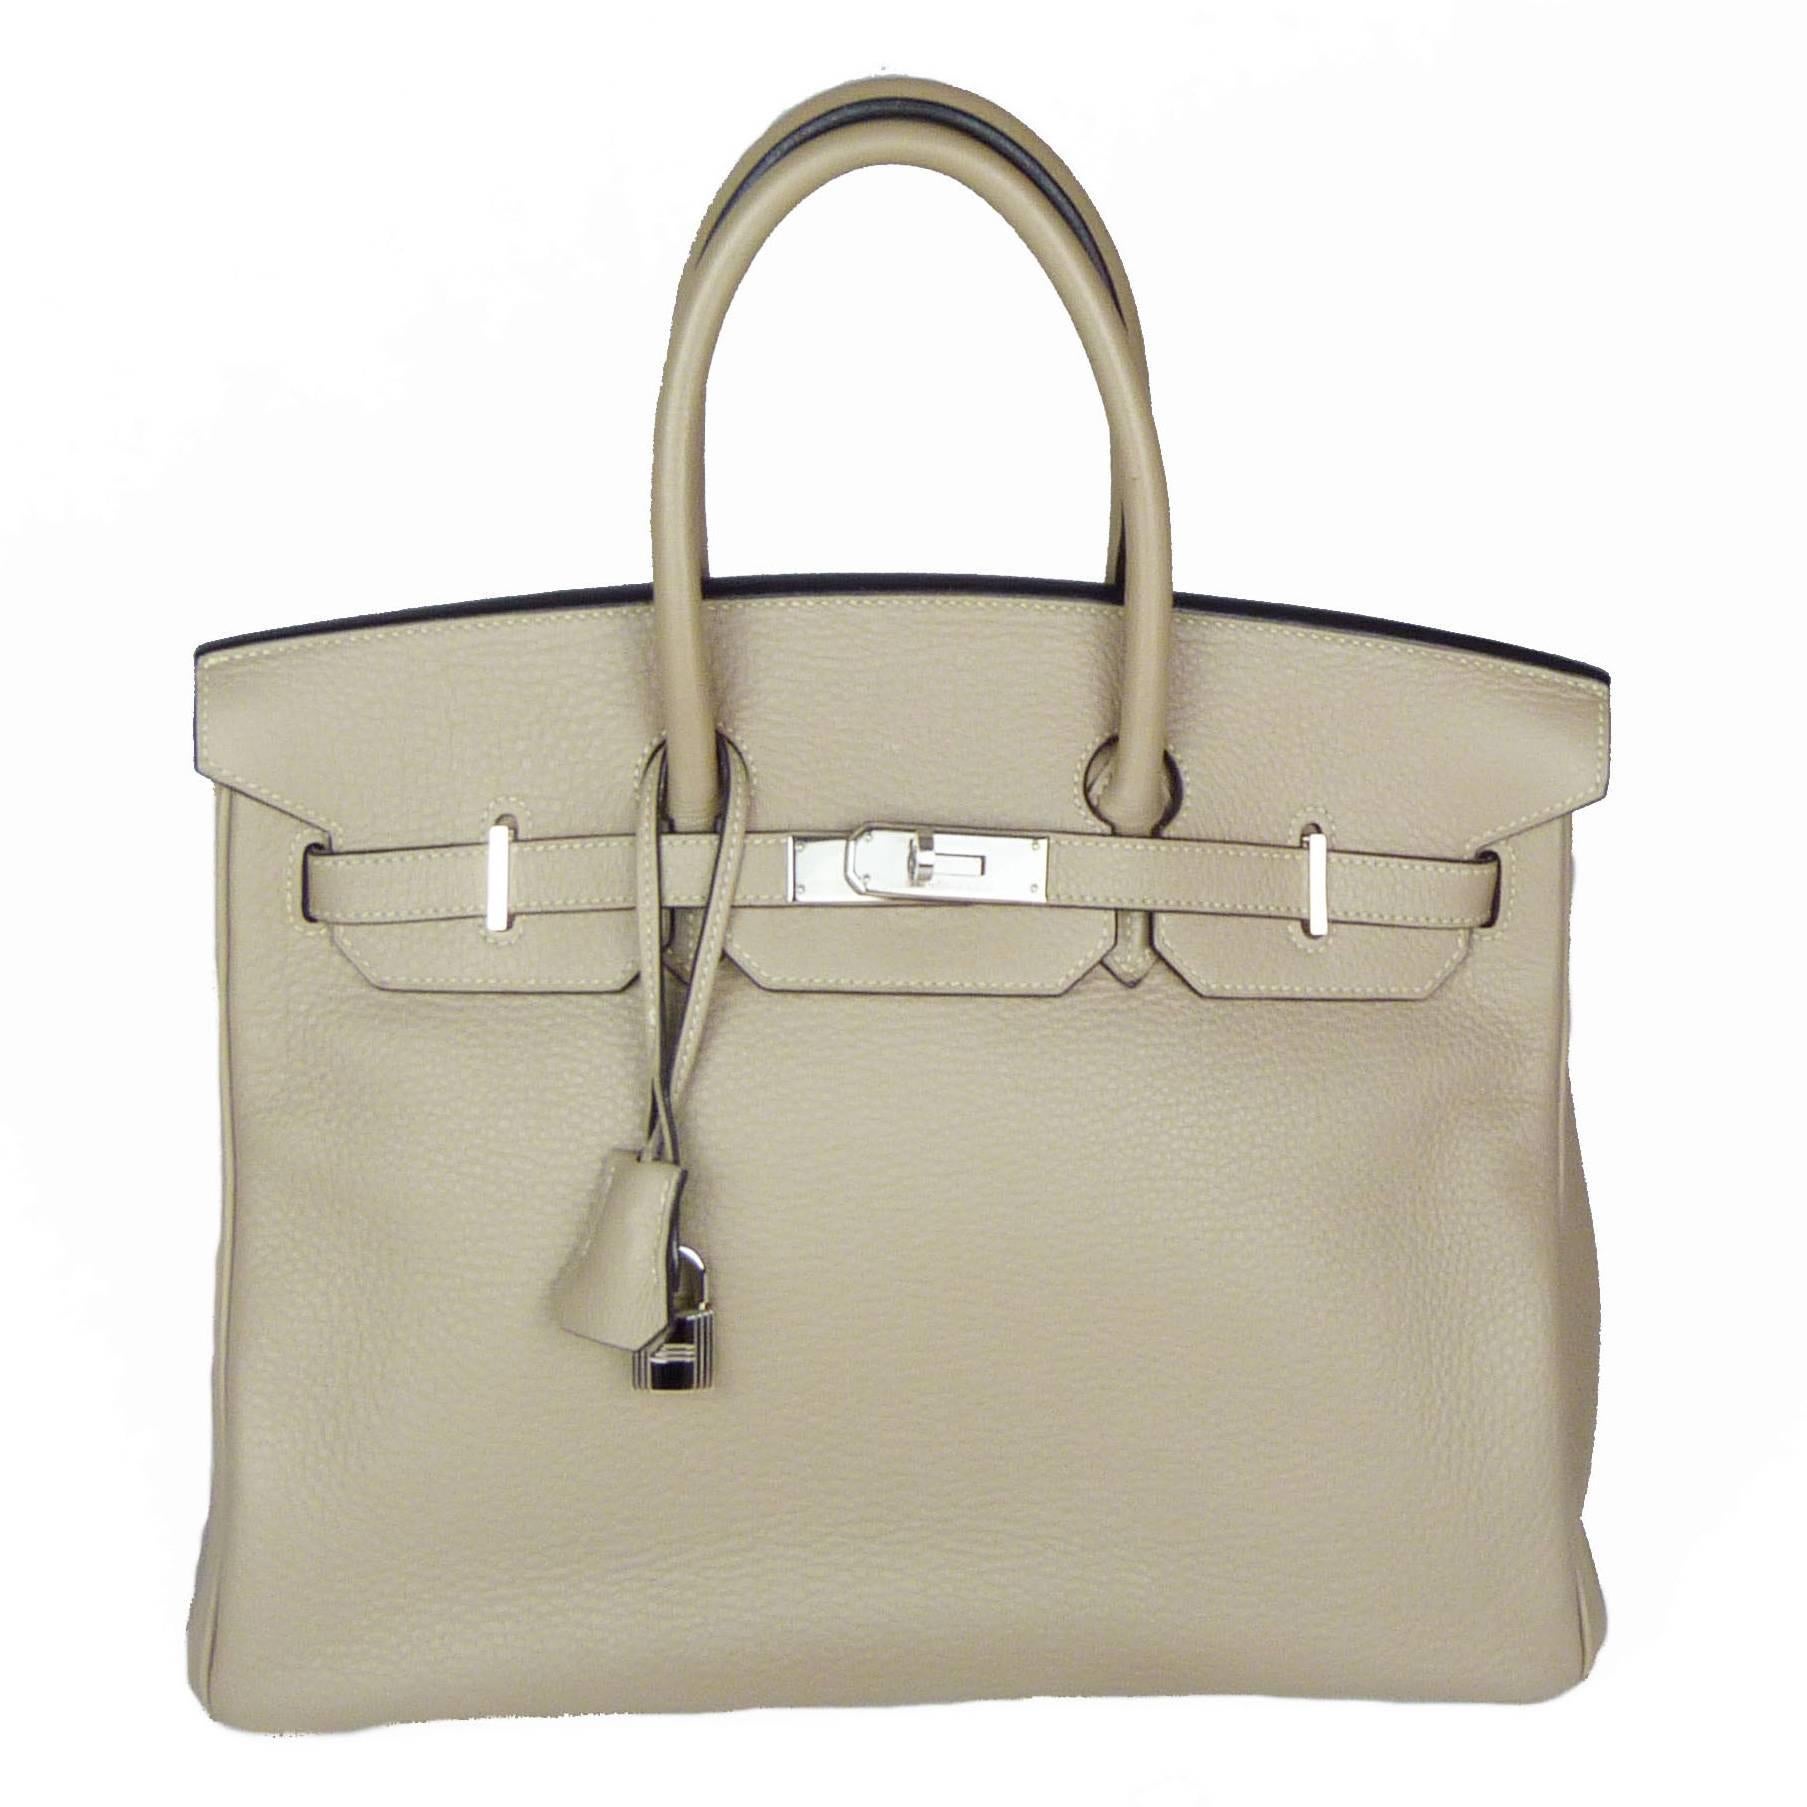 women genuine leath handbags set togo bucket bags drawstring tote bags,Grey,18CM 